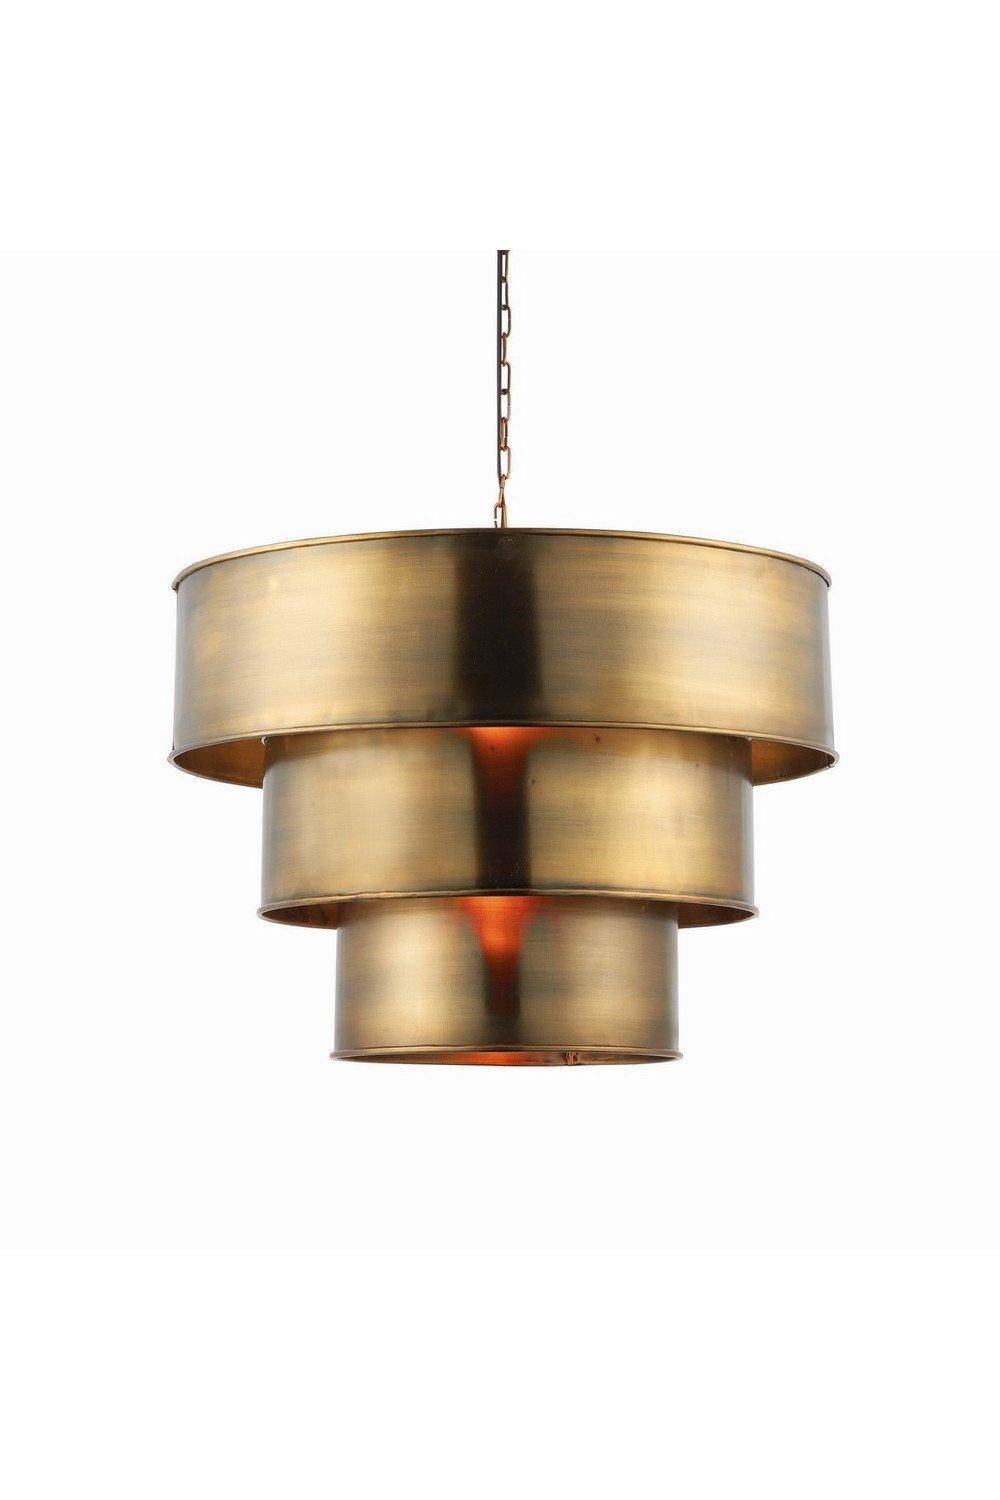 Morad 1 Light Cylindrical Ceiling Pendant Antique Brass E27